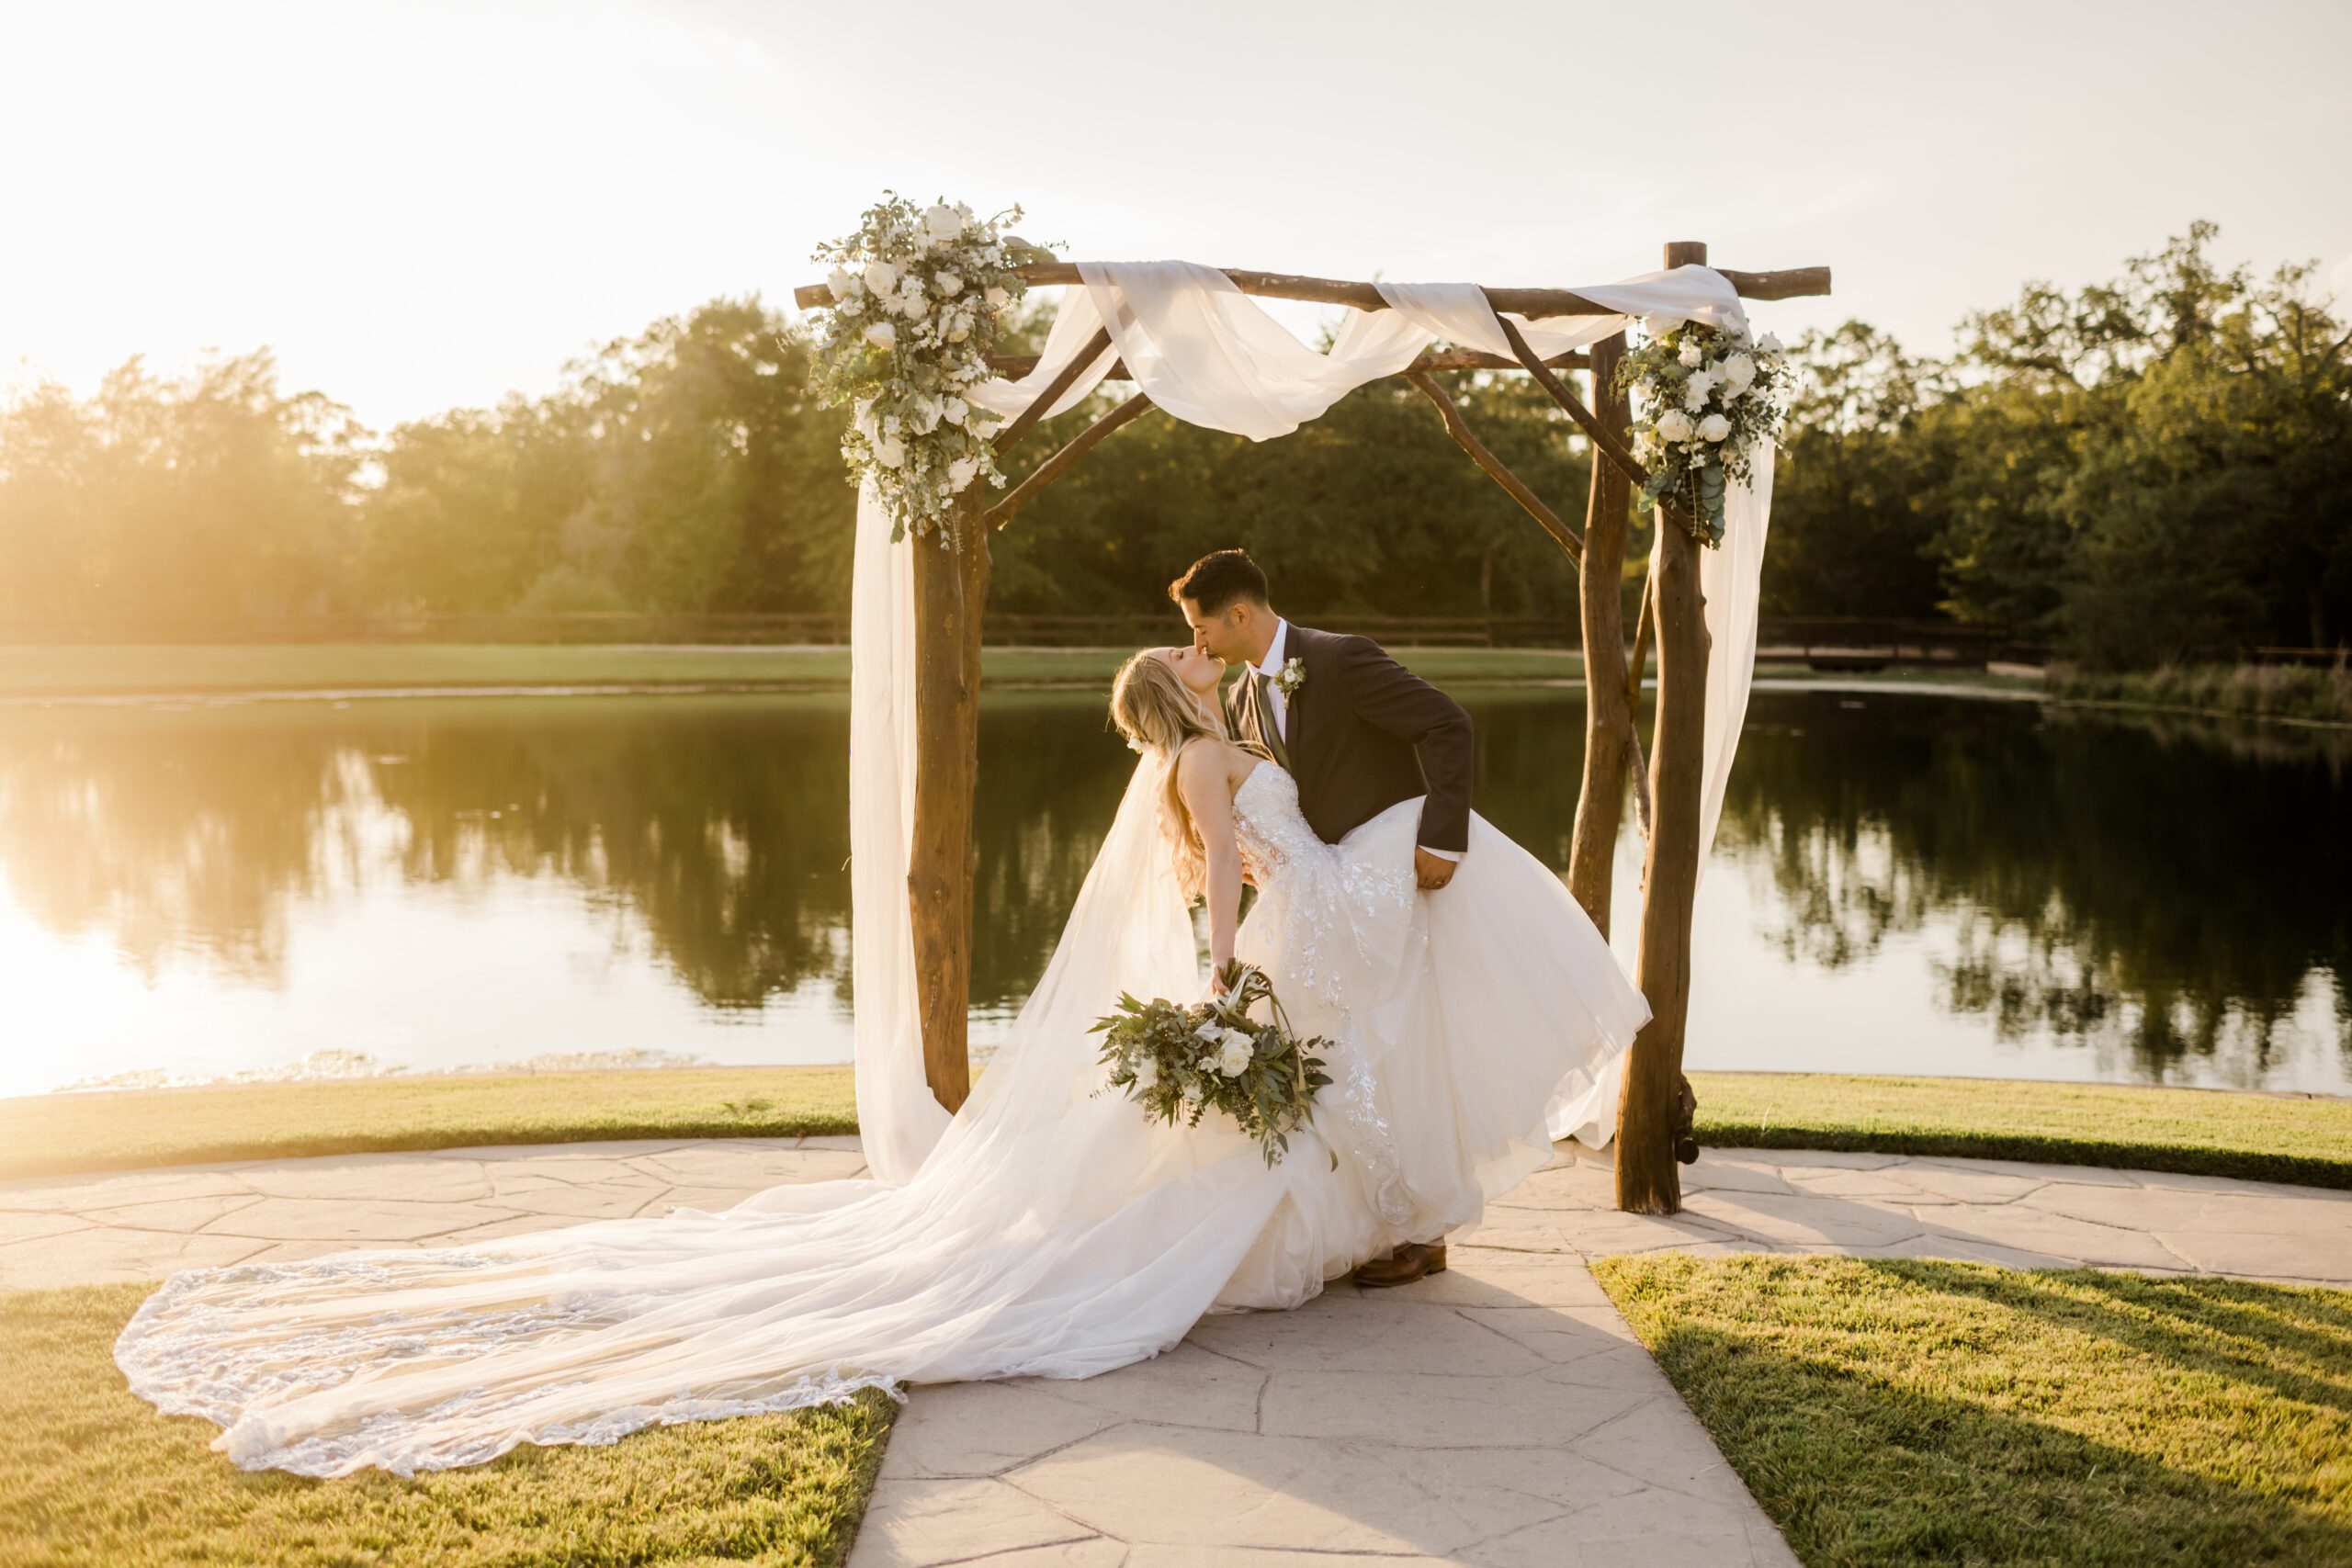 Leigh & Alex's Wedding at Peach Creek Ranch in College Station, Texas